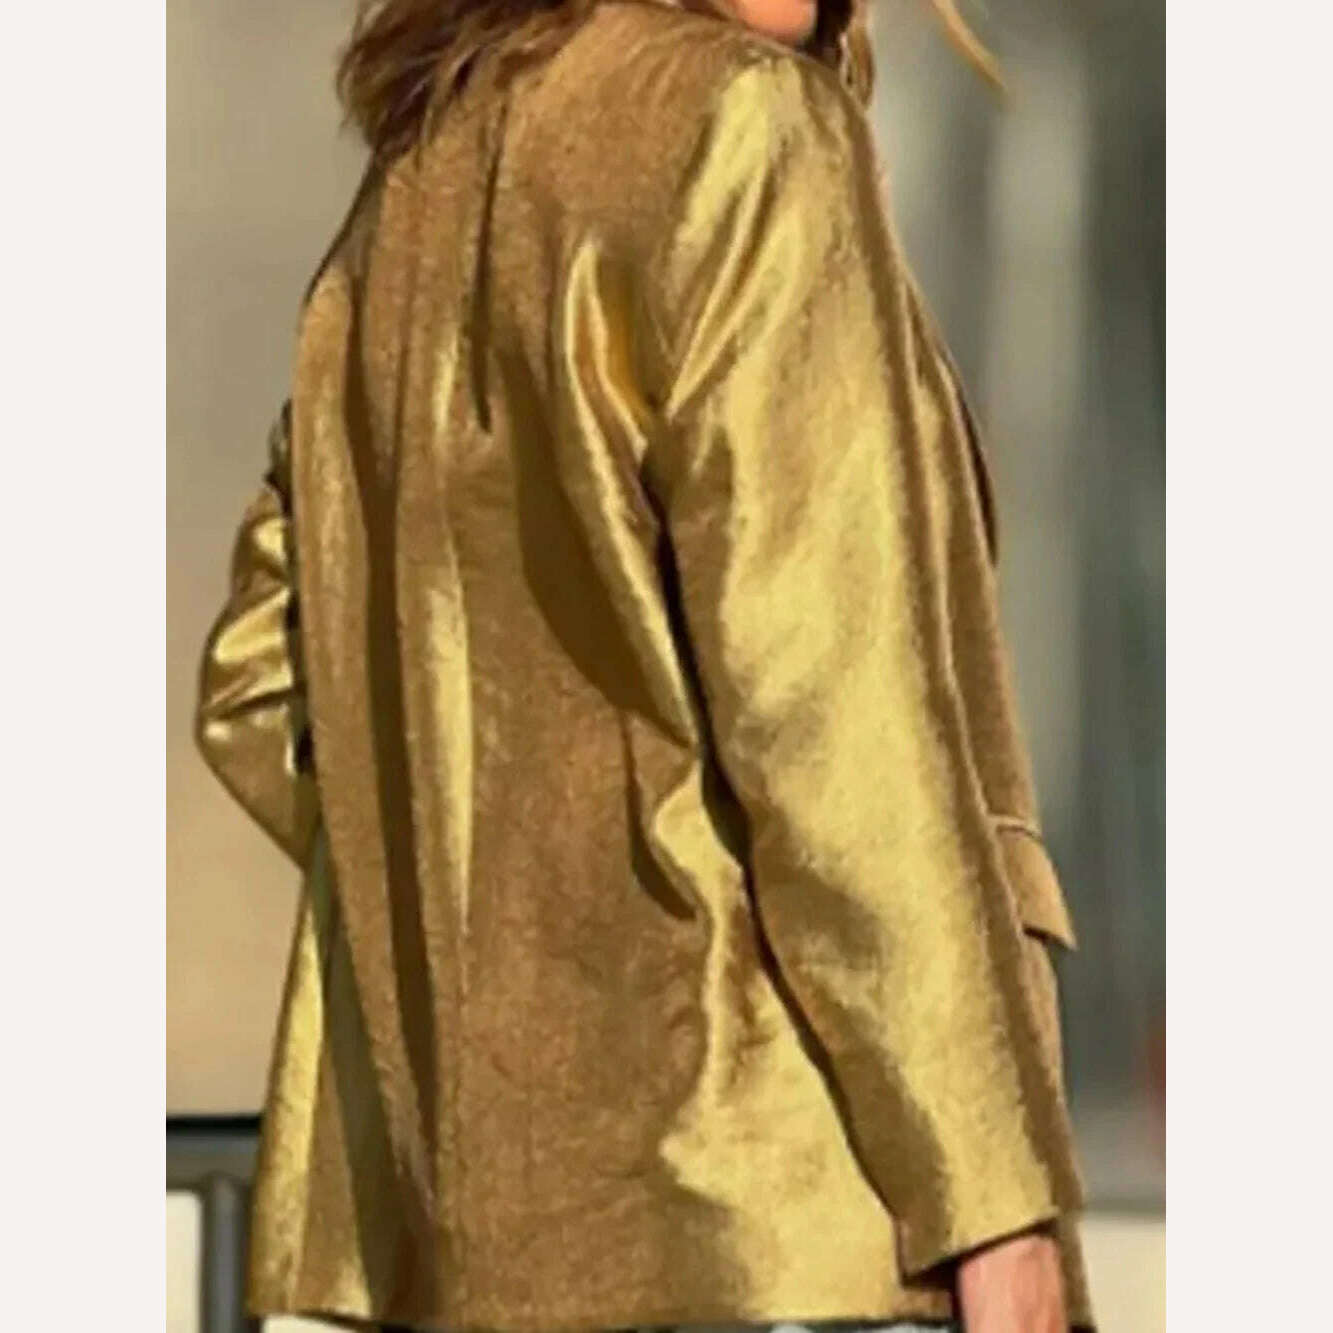 Gold Loose Blazer Jacket for Women Lapel Collar Jackets Spring Autumn Long Sleeve V Neck Coat Streetwear Lady Elegant Outerwear, KIMLUD Women's Clothes